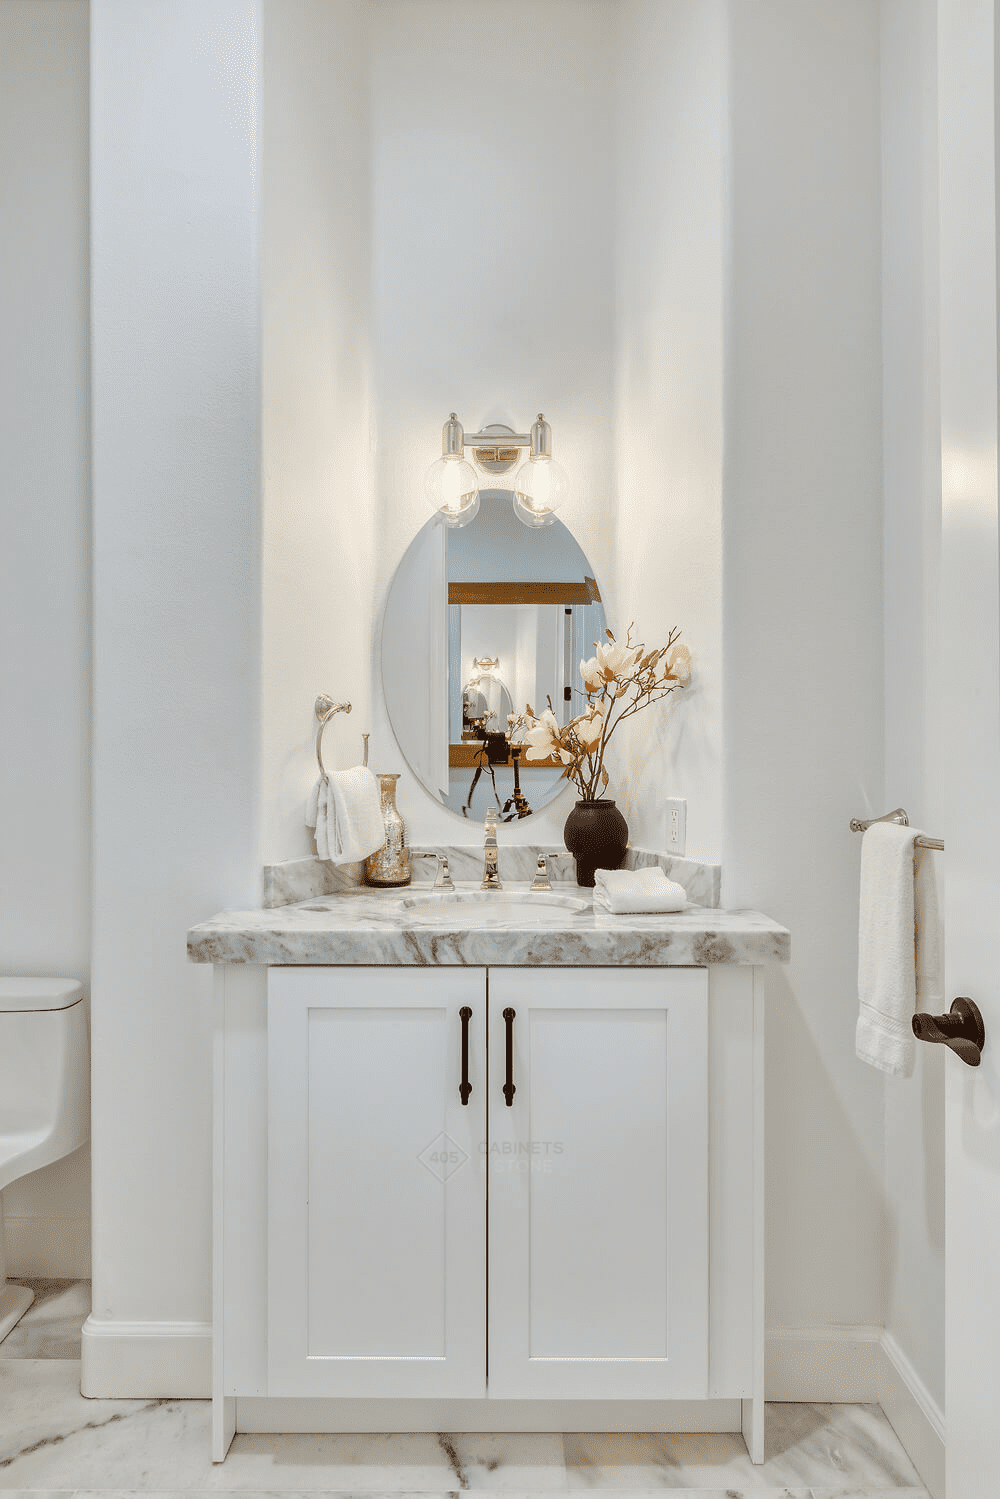 Cabinet Design Ideas for Small Bathrooms - 405 Cabinets & Stone - 5